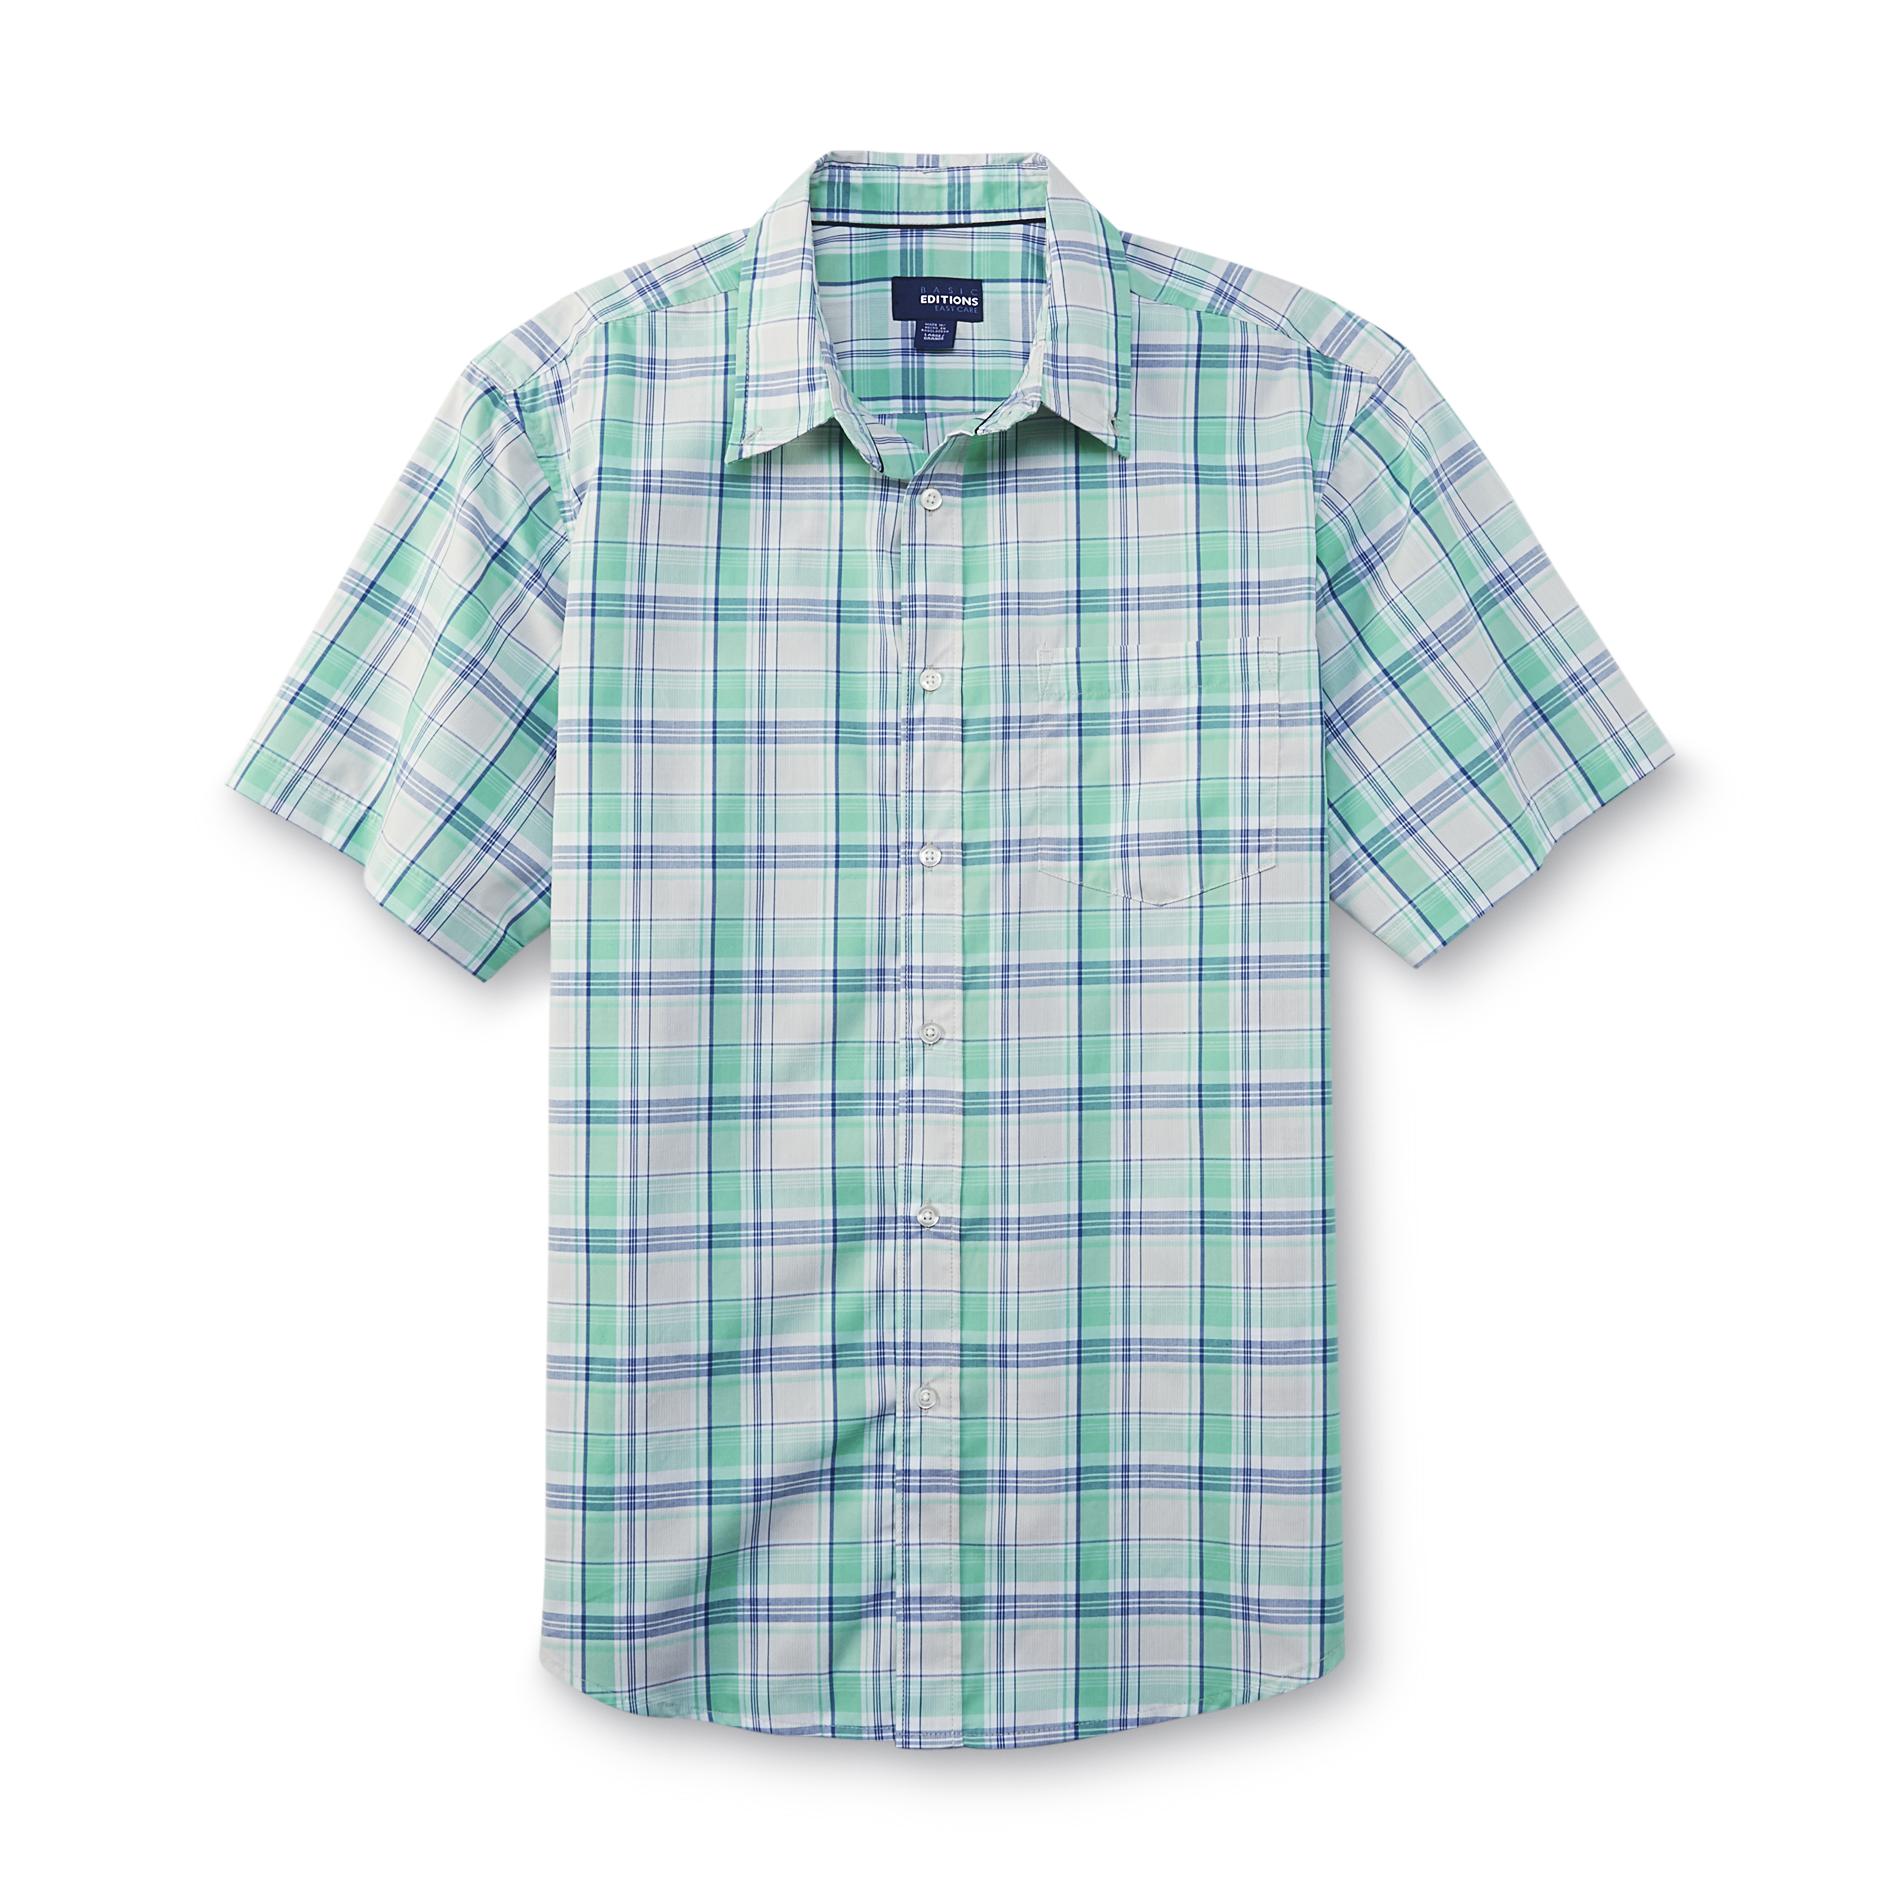 Basic Editions Men's Big & Tall Easy Care Short-Sleeve Shirt - Plaid